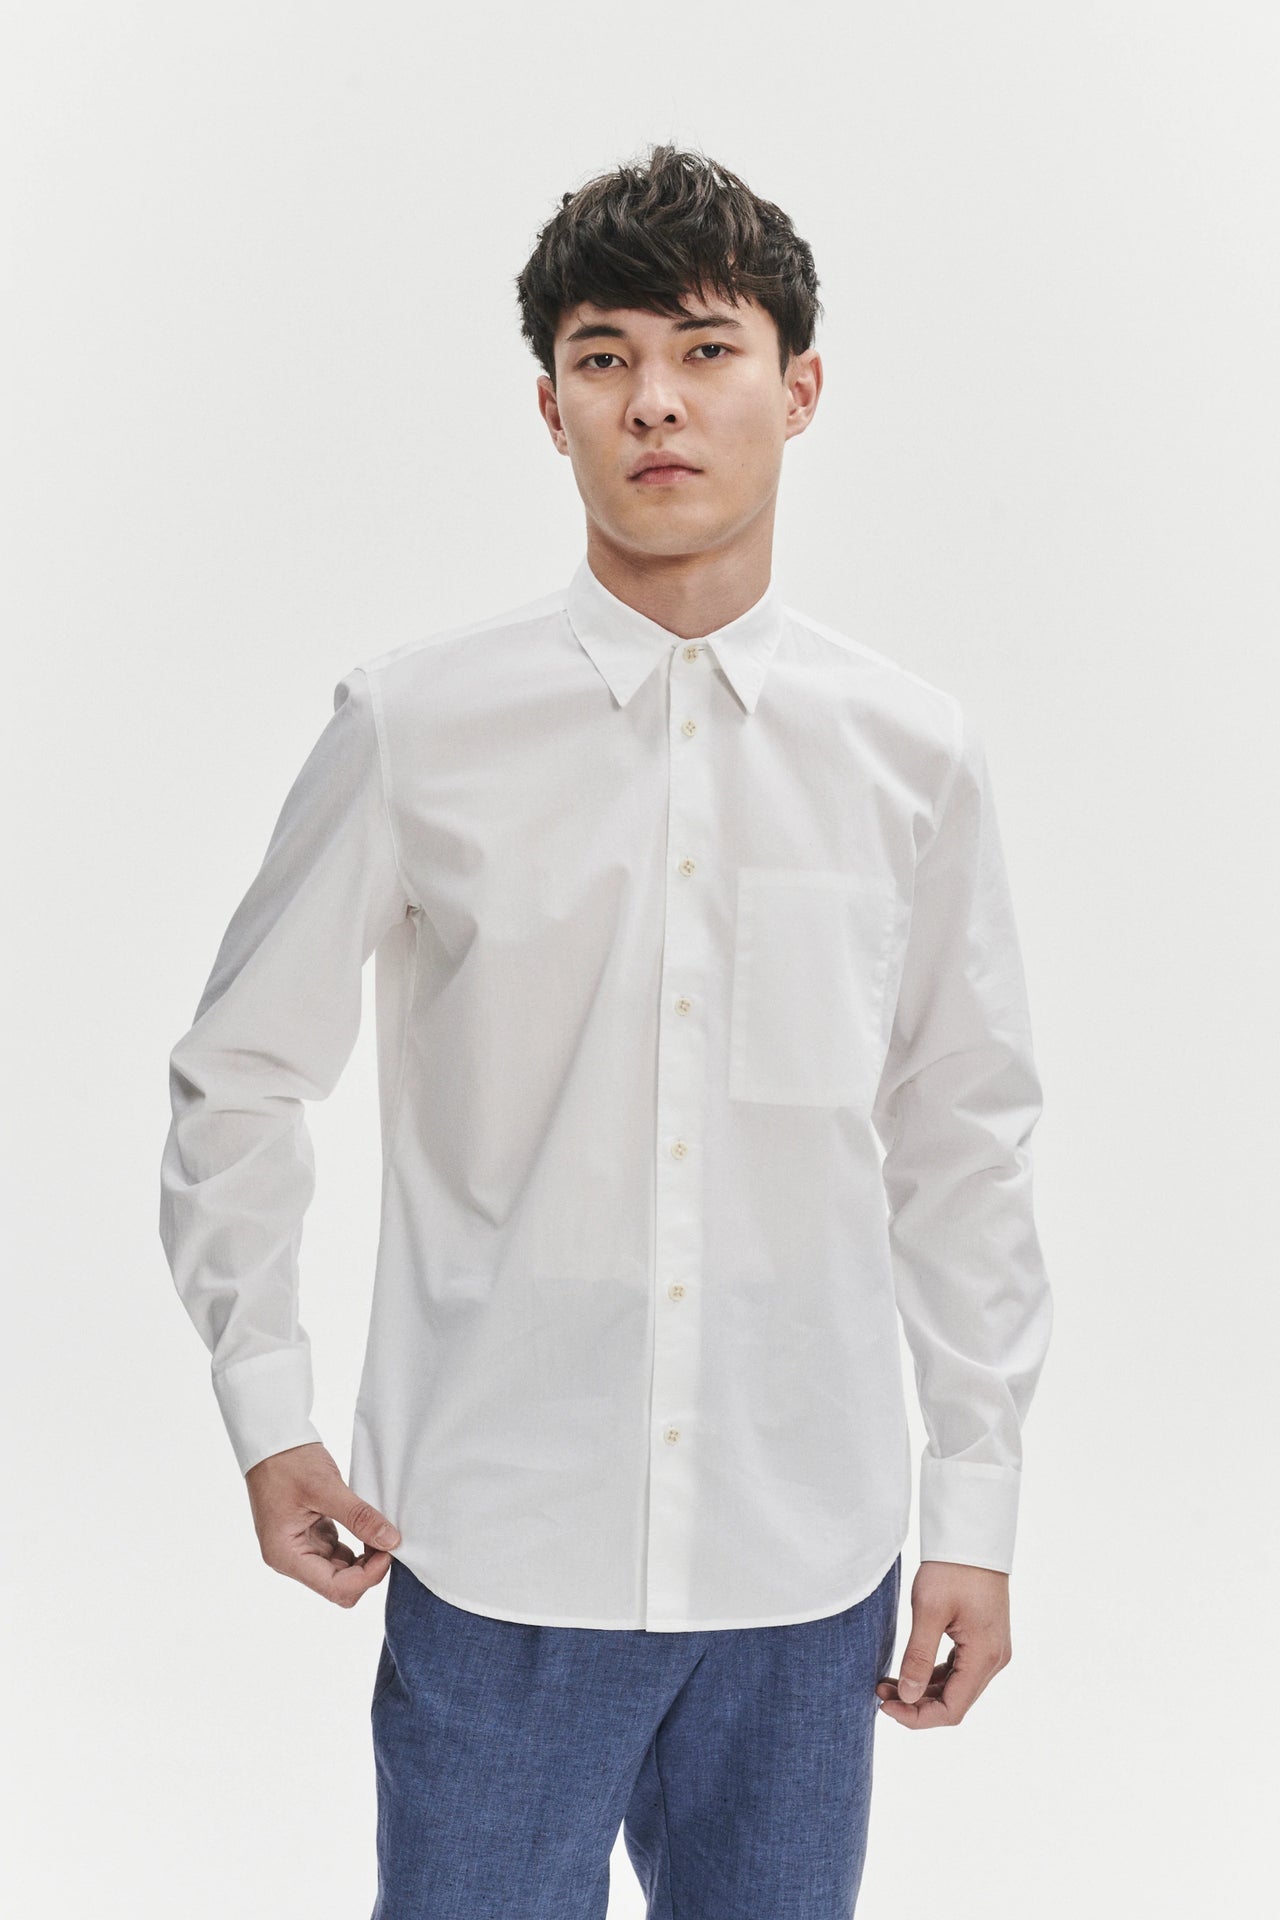 Feel Good Shirt in a White Fine Organic Portuguese Cotton Poplin